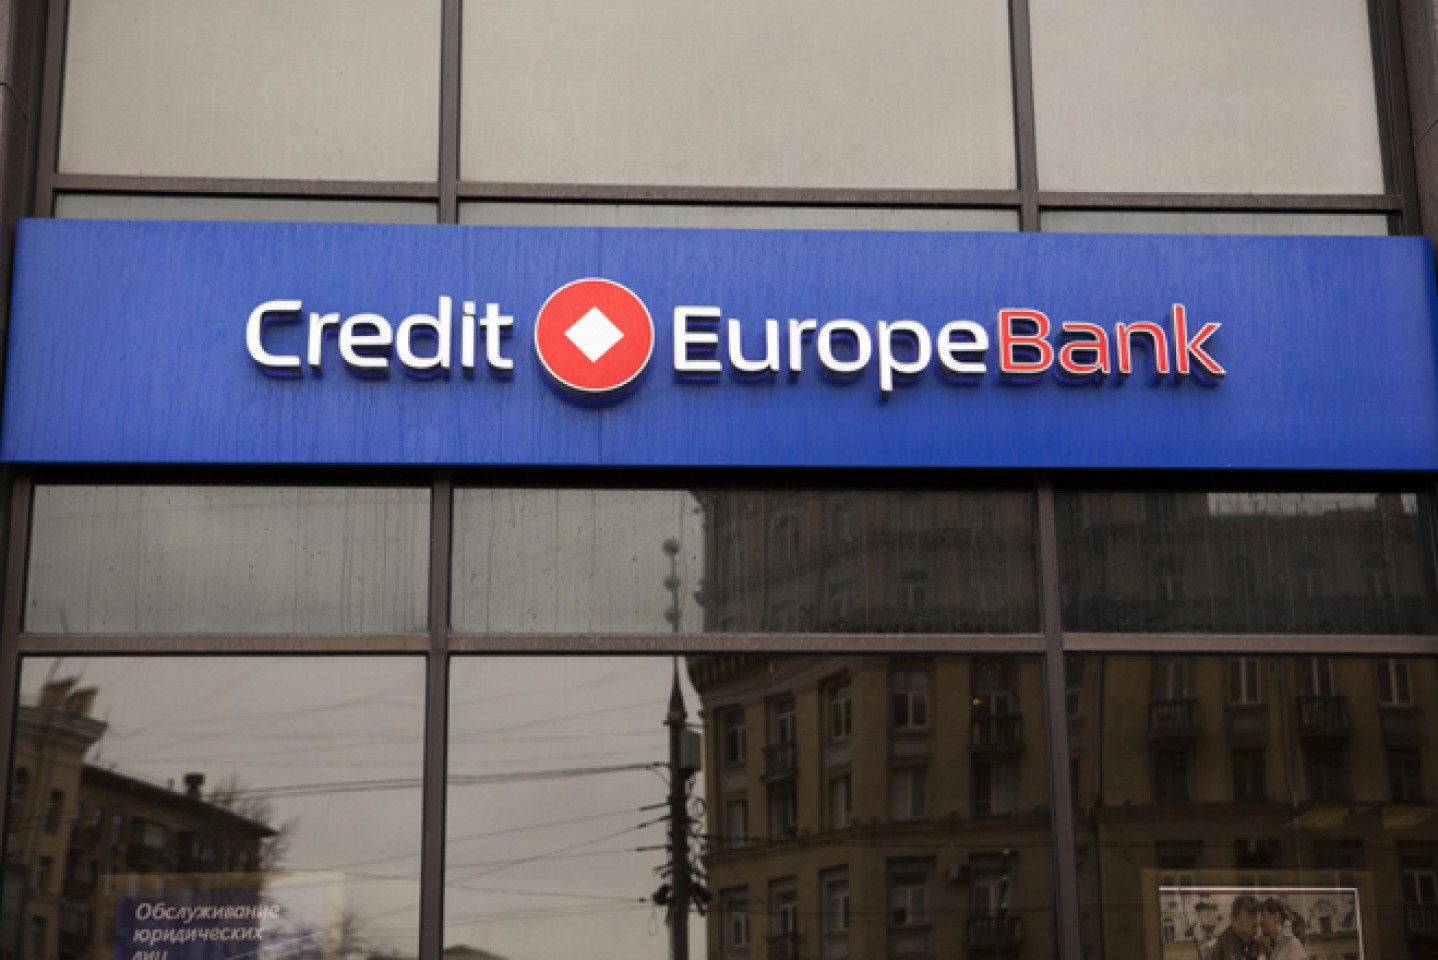 Счета в европейских банках. Европа банк. Кредит Европа банк. Европа банк логотип. Кредитевропабанк банк.